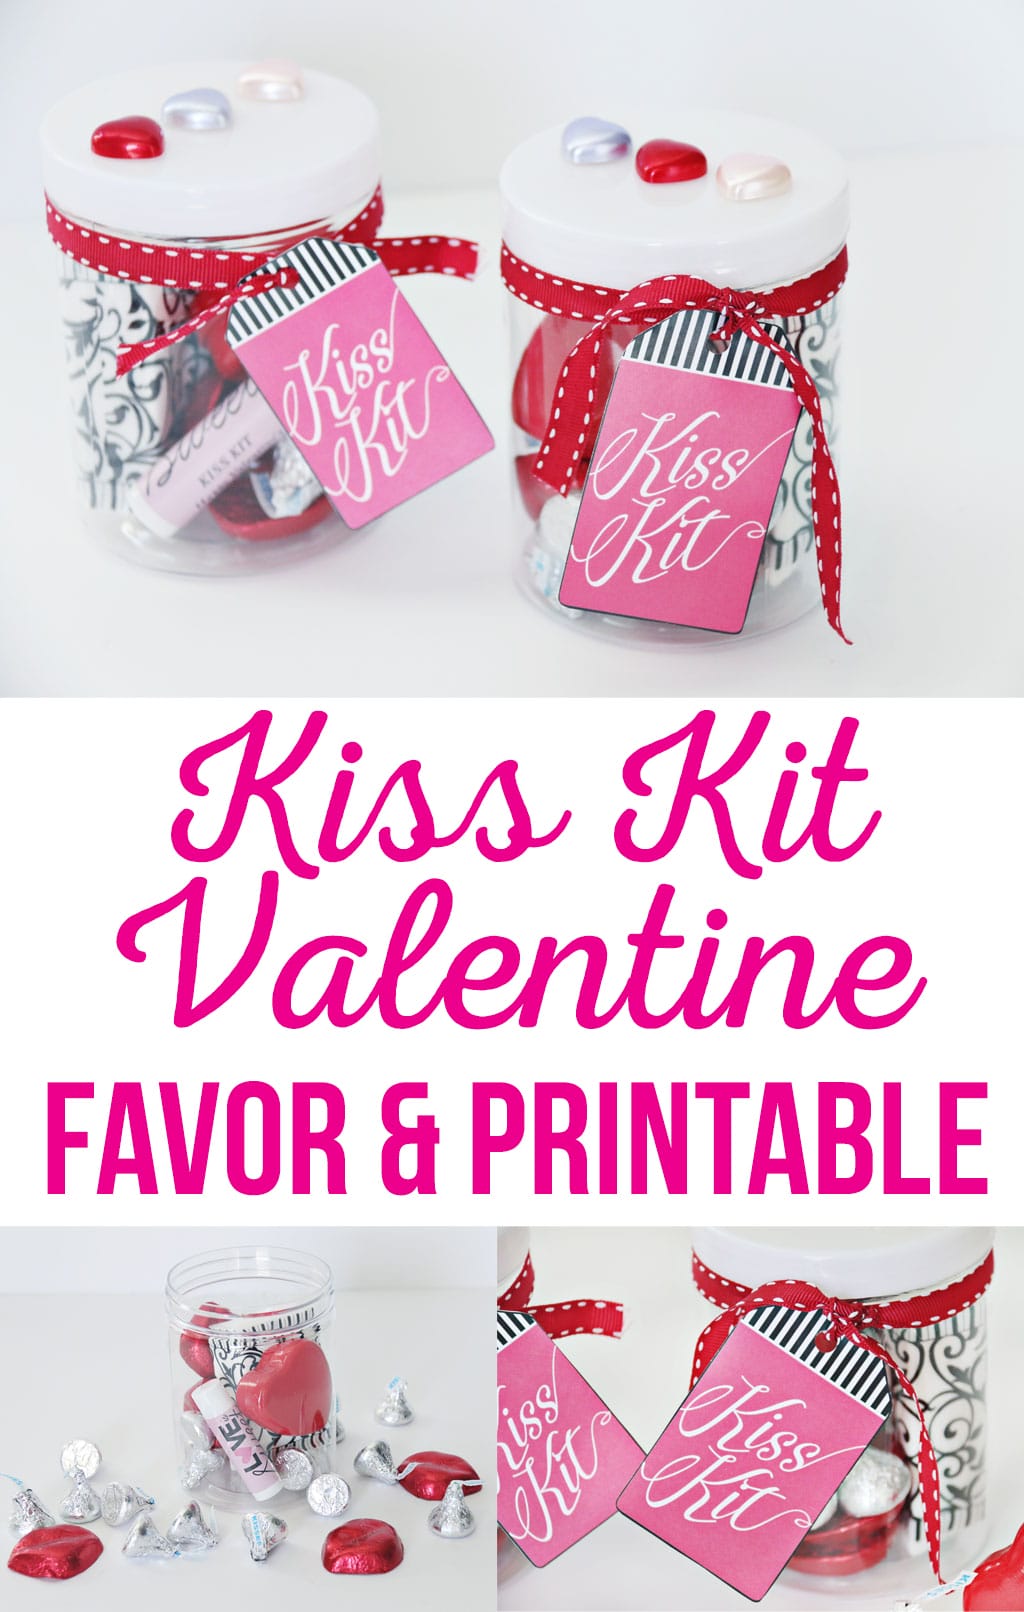 Kiss Kit Valentine Favor and Printable